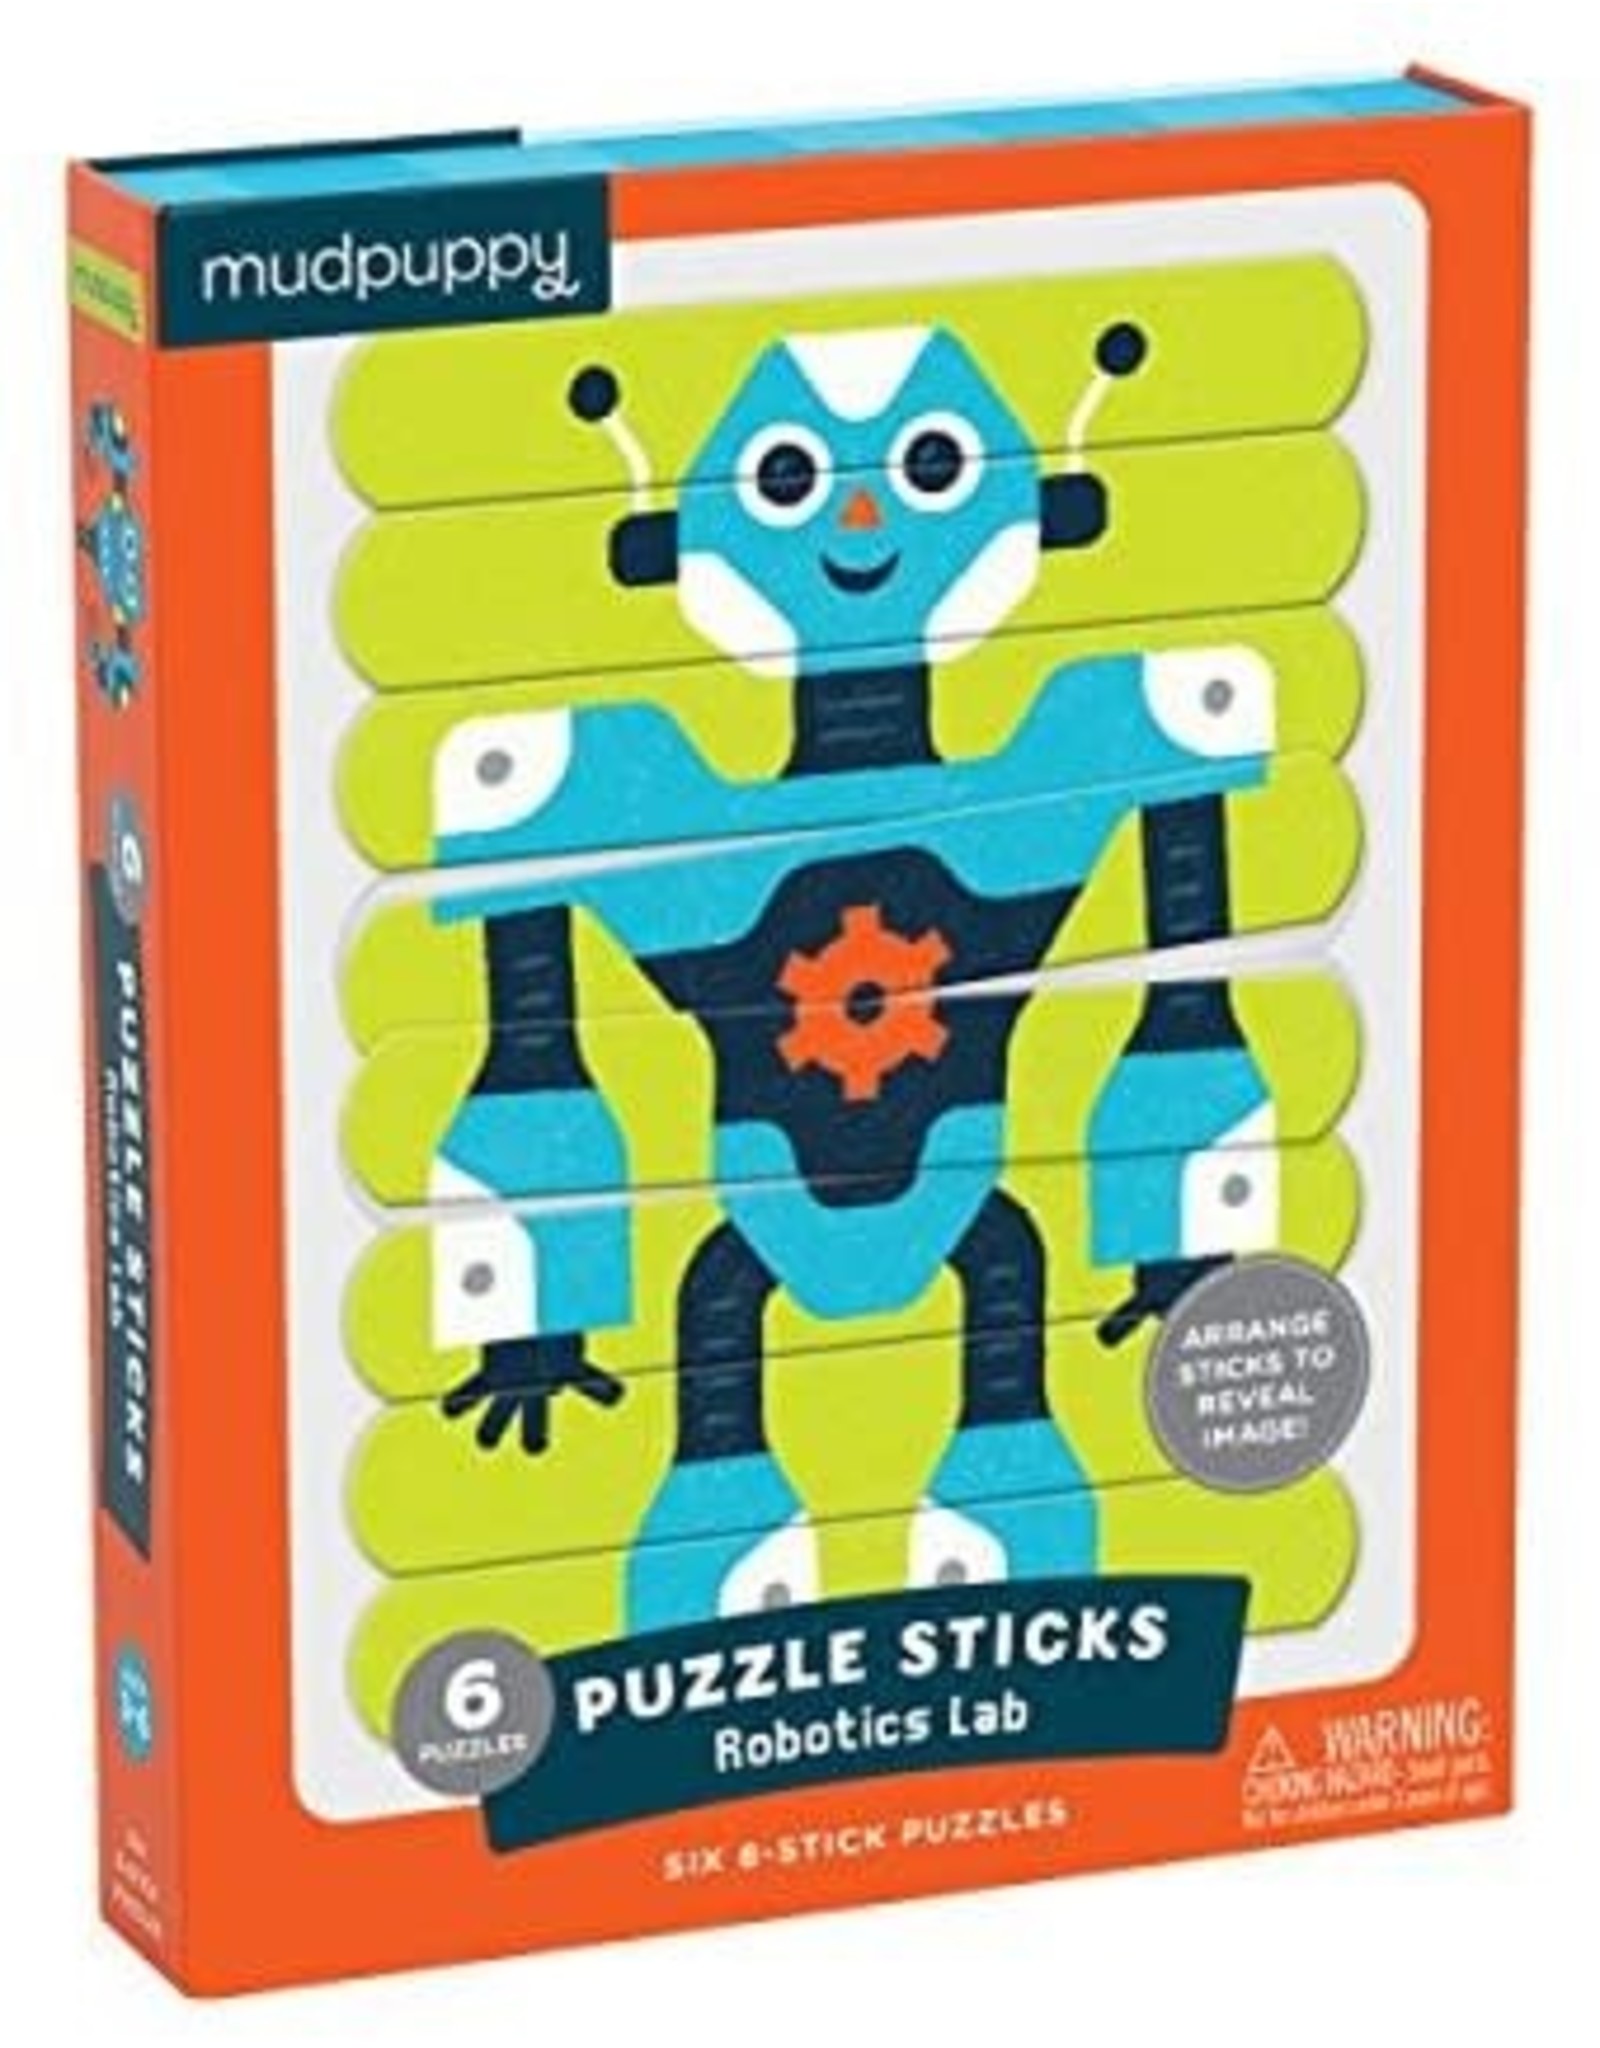 Mudpuppy Puzzle Sticks "Robotics Lab"